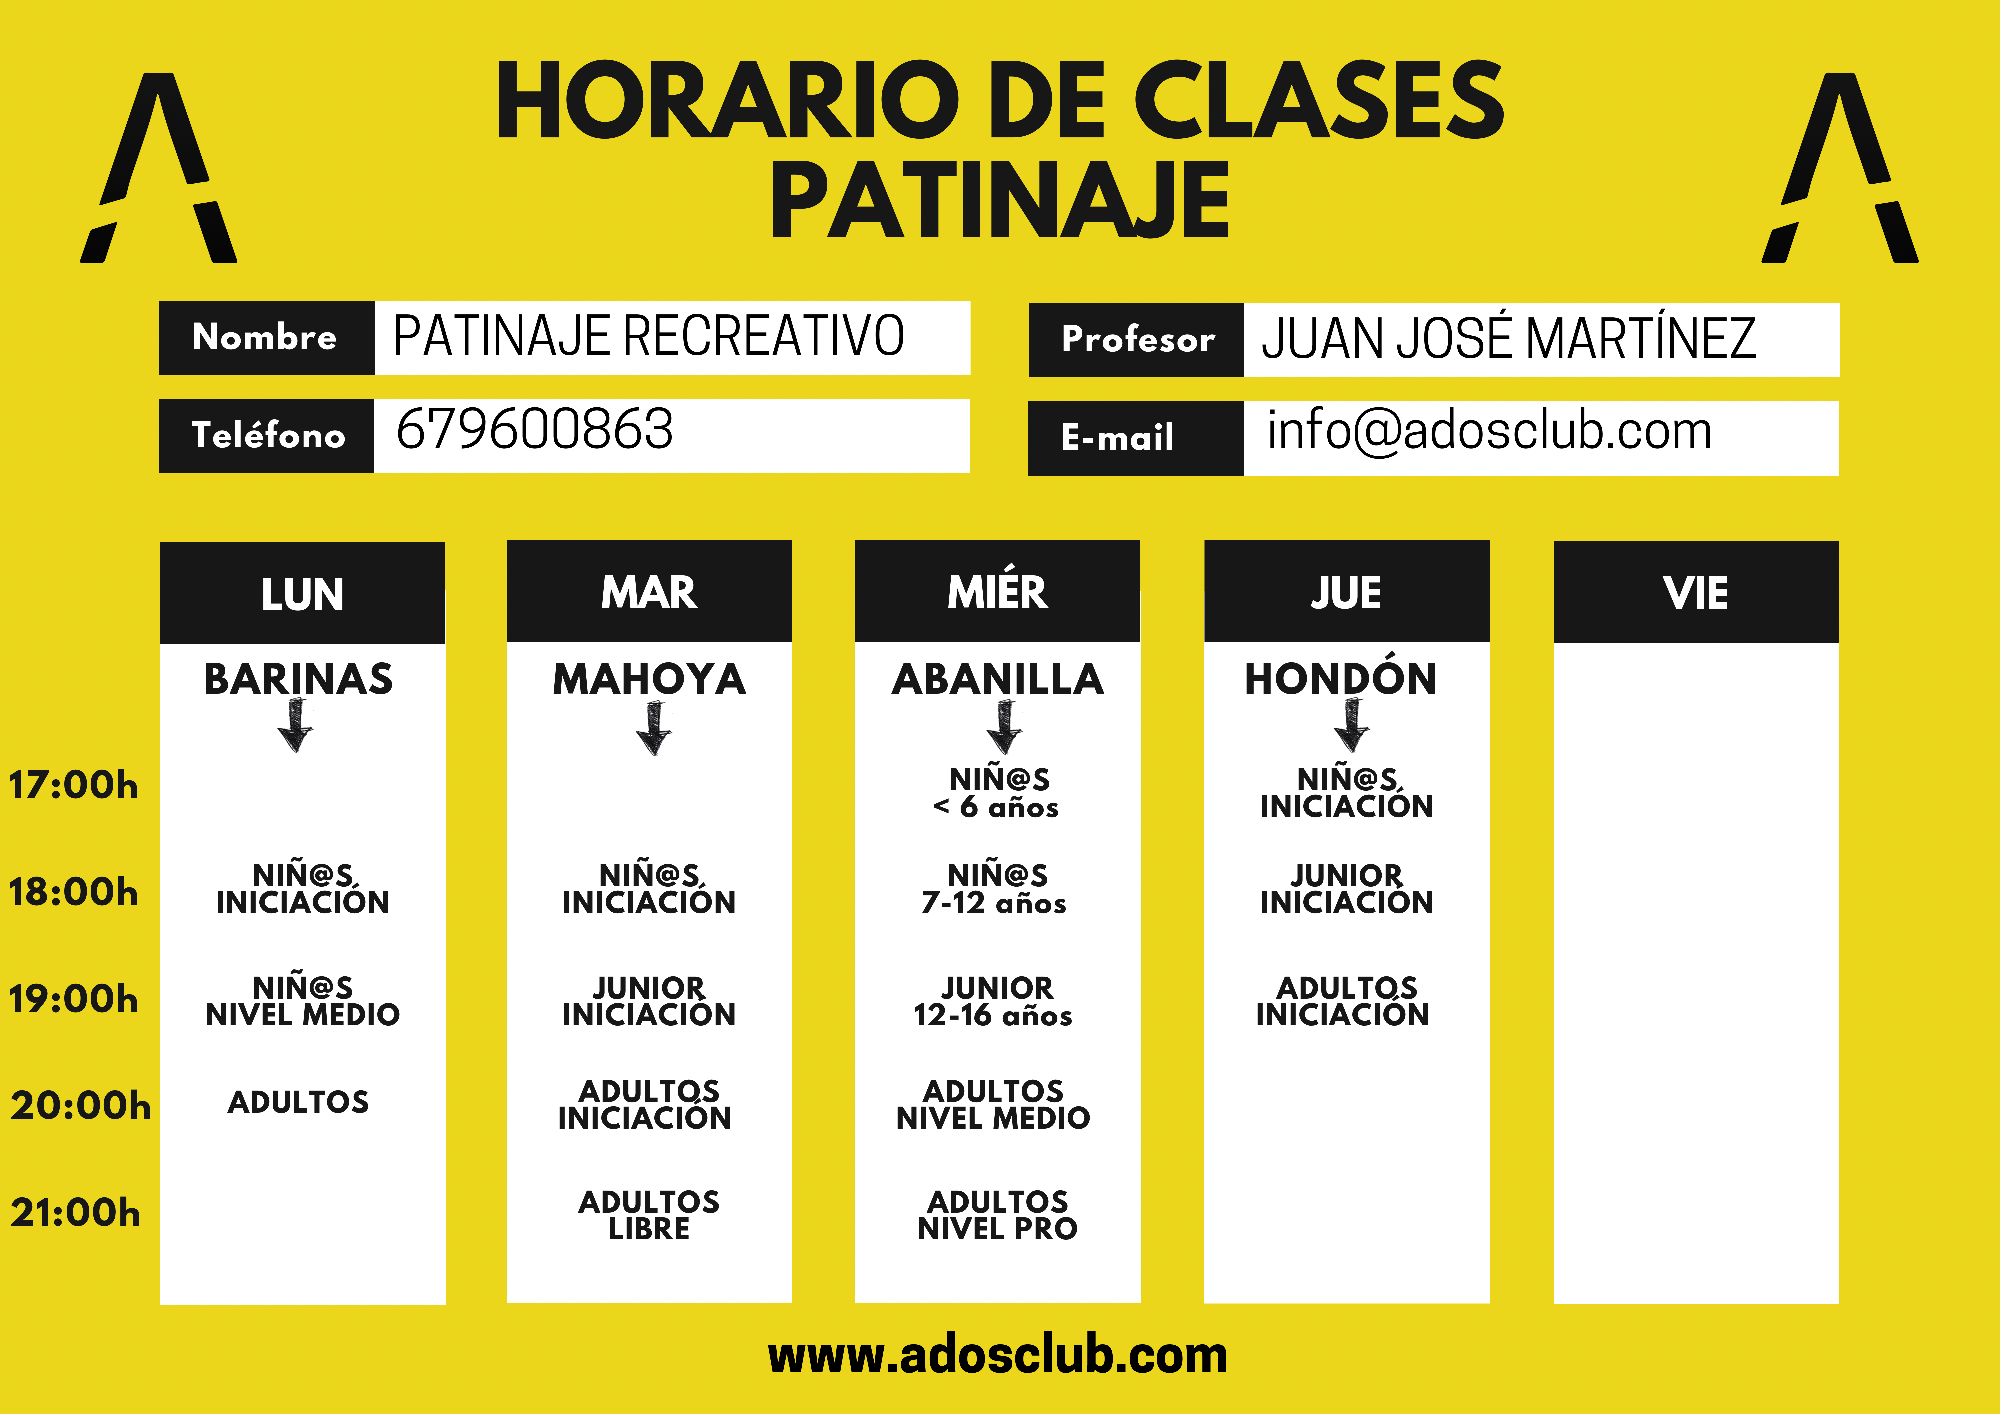 ADOS FITNESS CLUB - Clases de patinaje Murcia - Abanilla